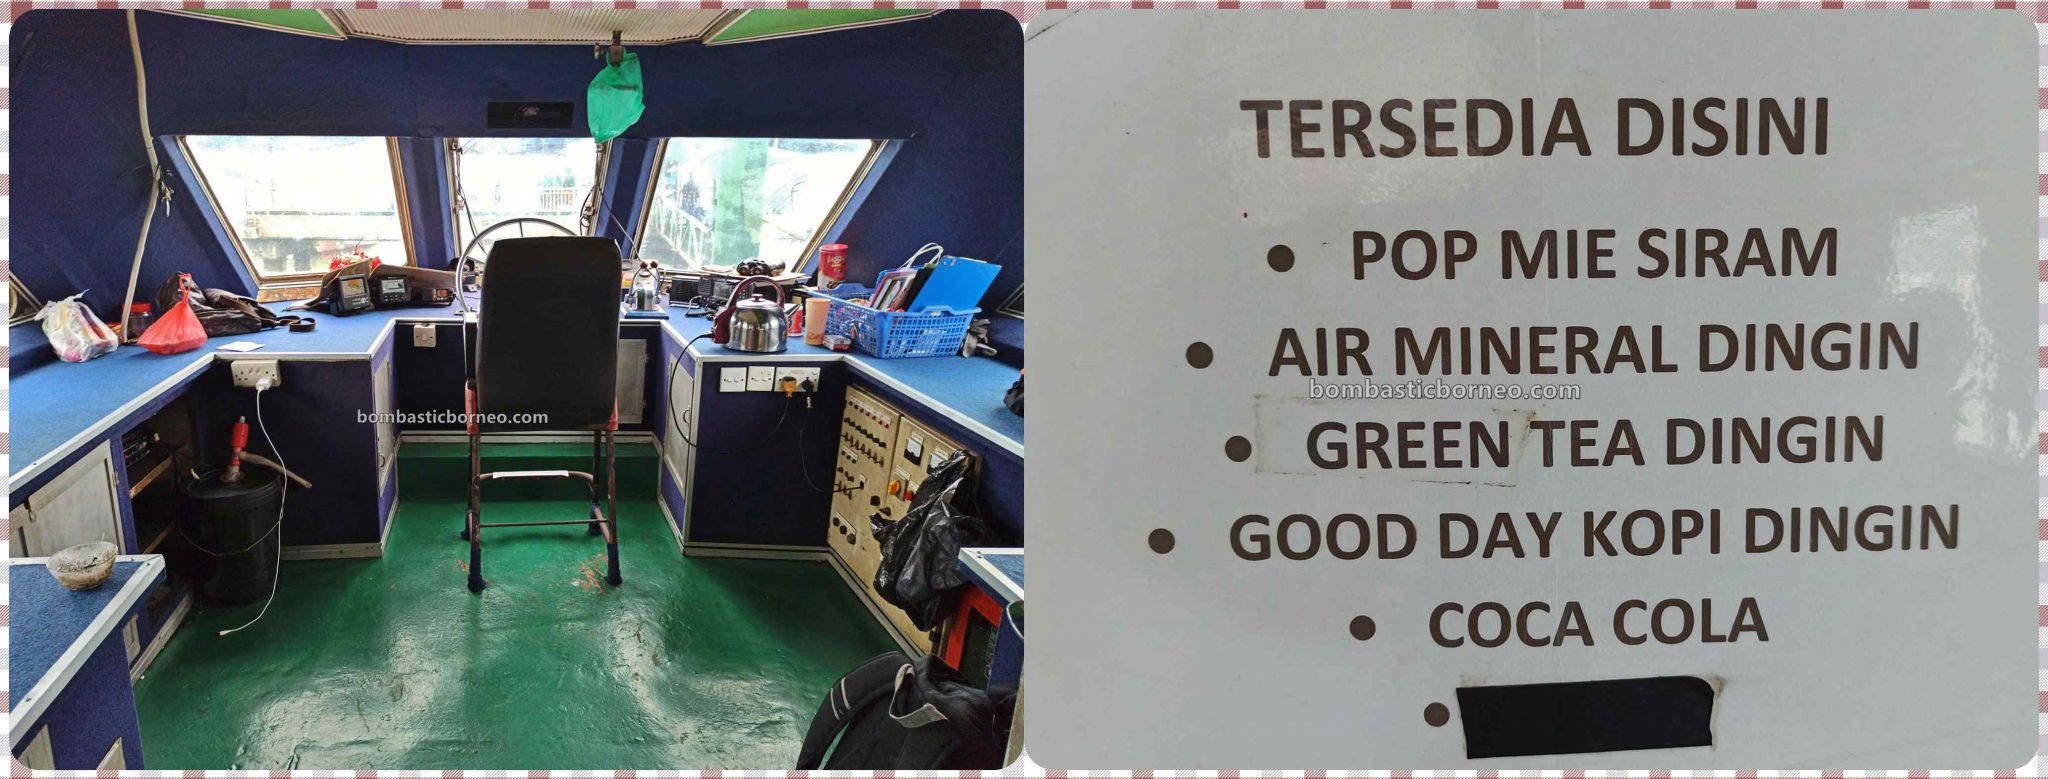 Ferry terminal, Express Boat Ride, Speed boat, North Kalimantan, Kaltara, Pelabuahan Malundung, port, Sabah, Tawau, Tourism, Transportation, travel guide, Border crossing, 跨境婆罗洲沙巴斗湖, 印尼北加里曼丹